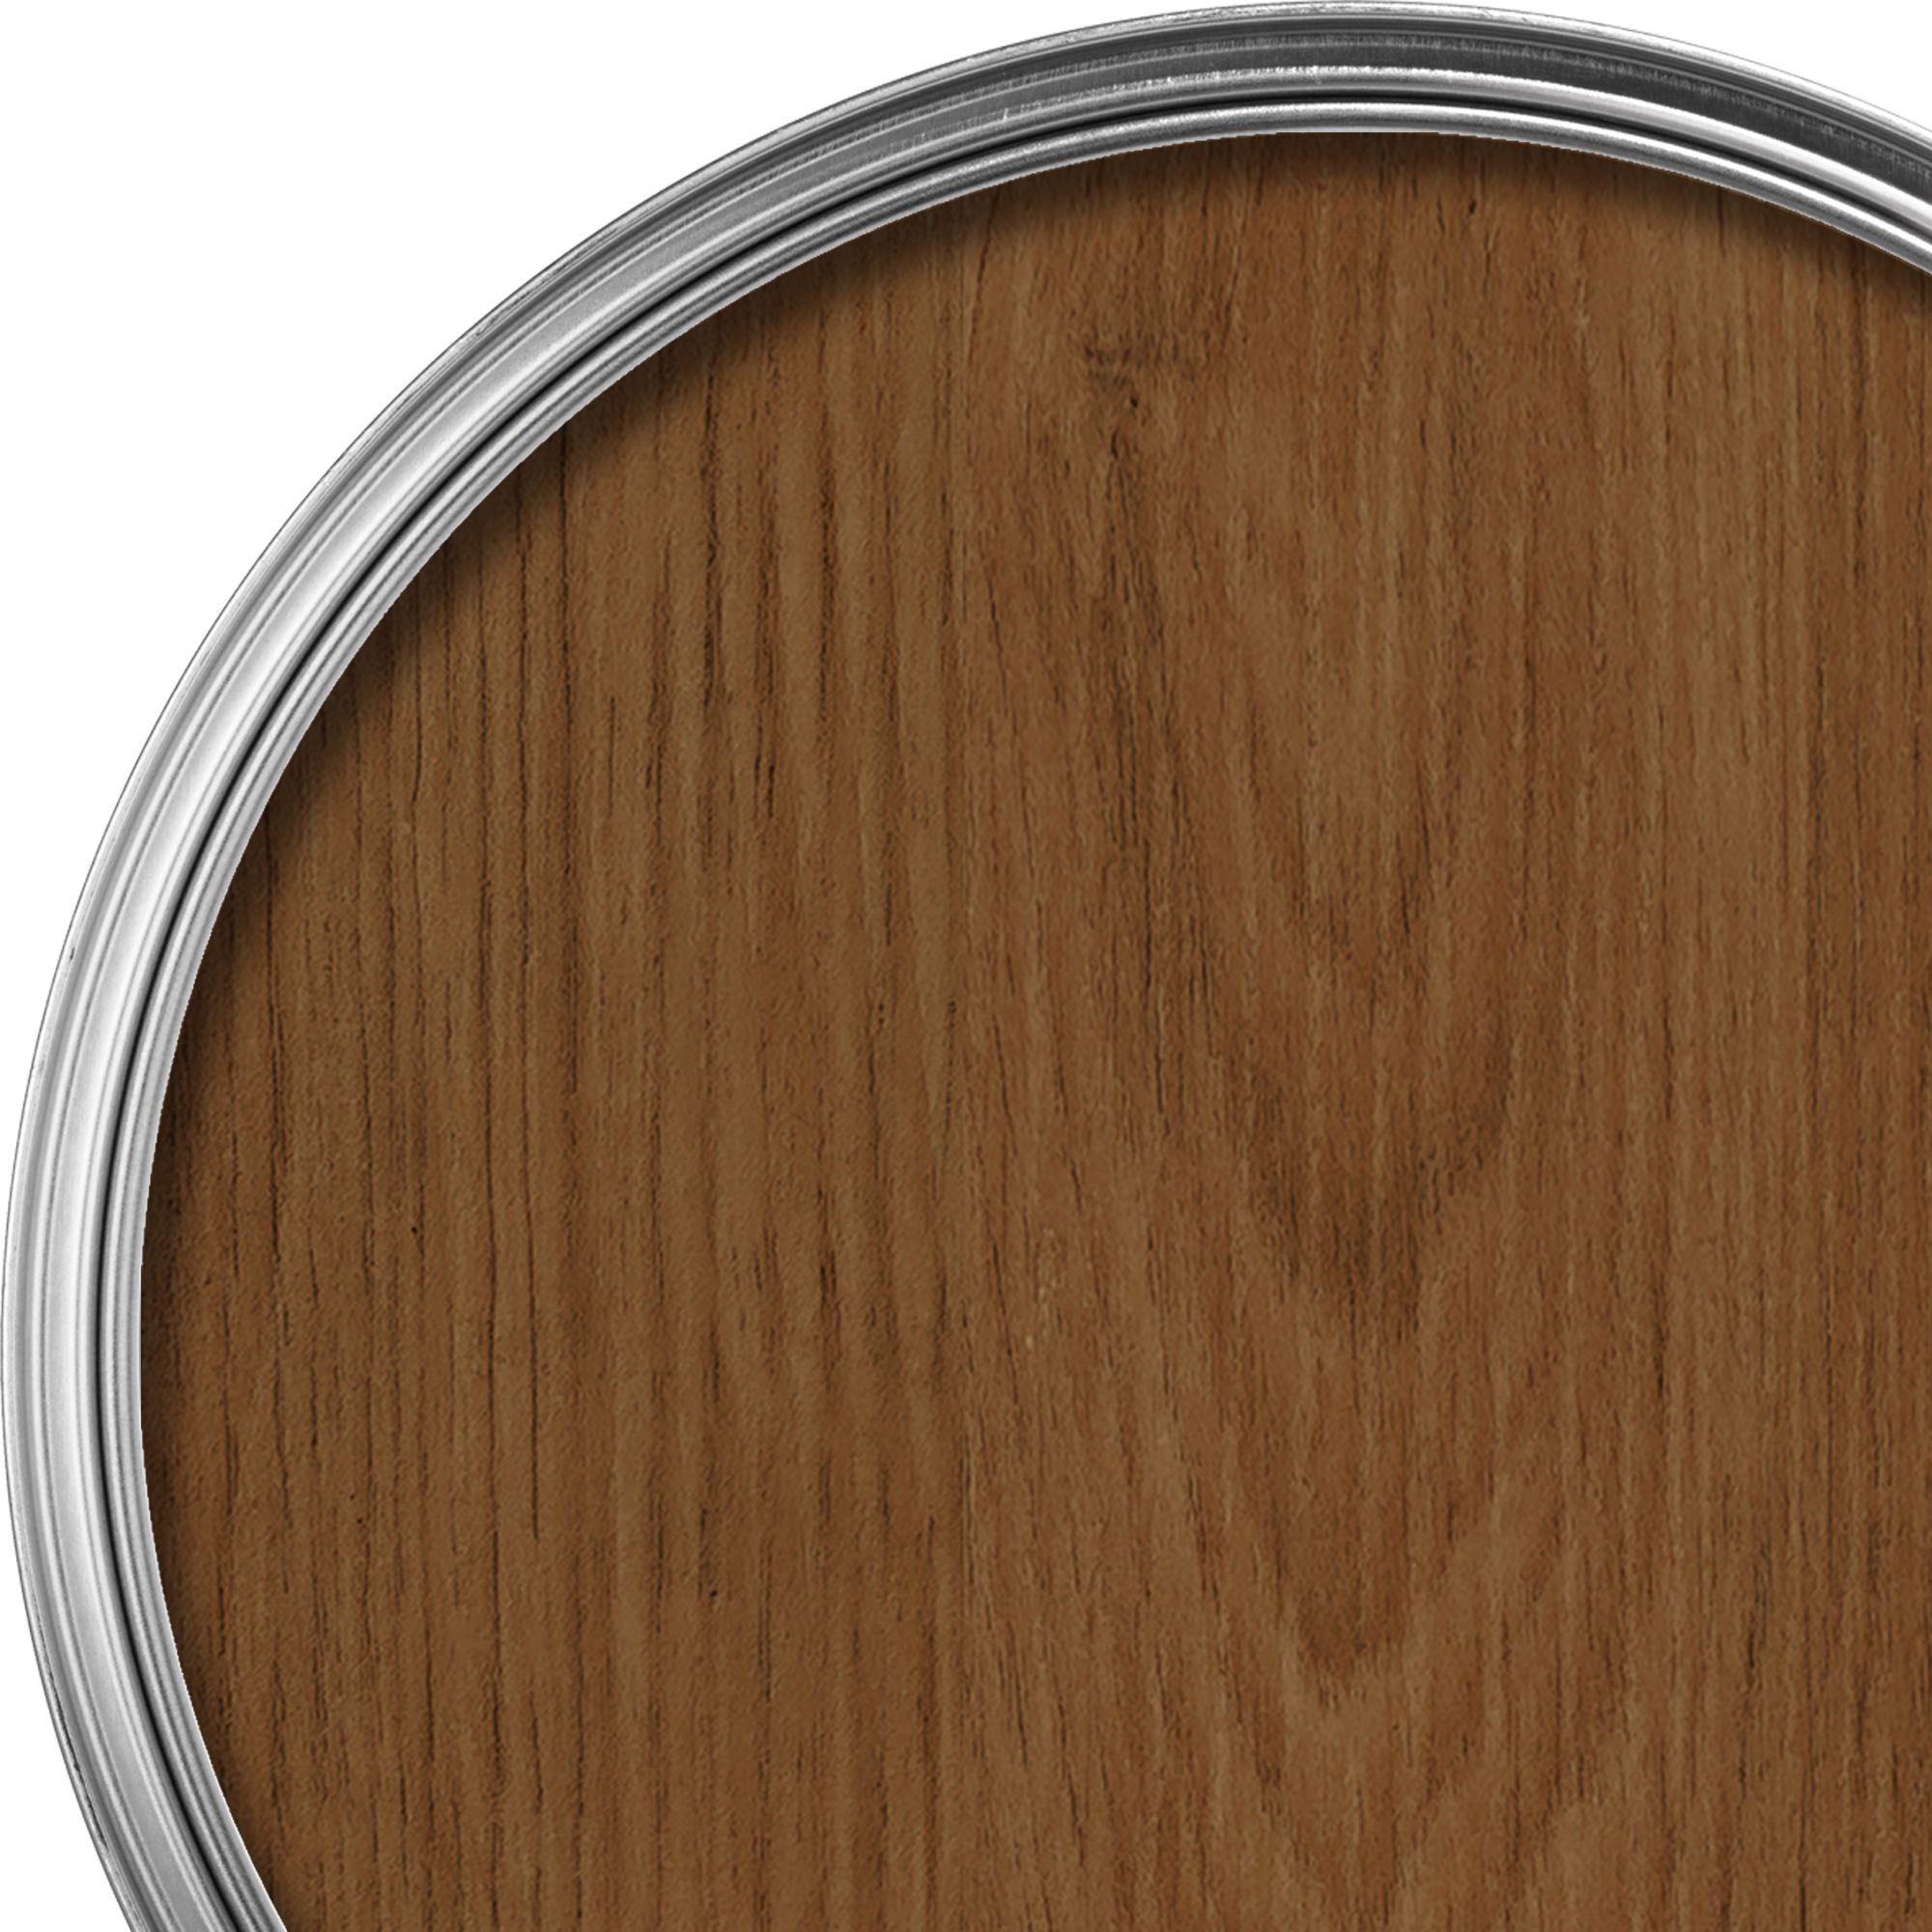 GoodHome Dark Oak Satin Multi-surface Furniture Wood varnish, 250ml